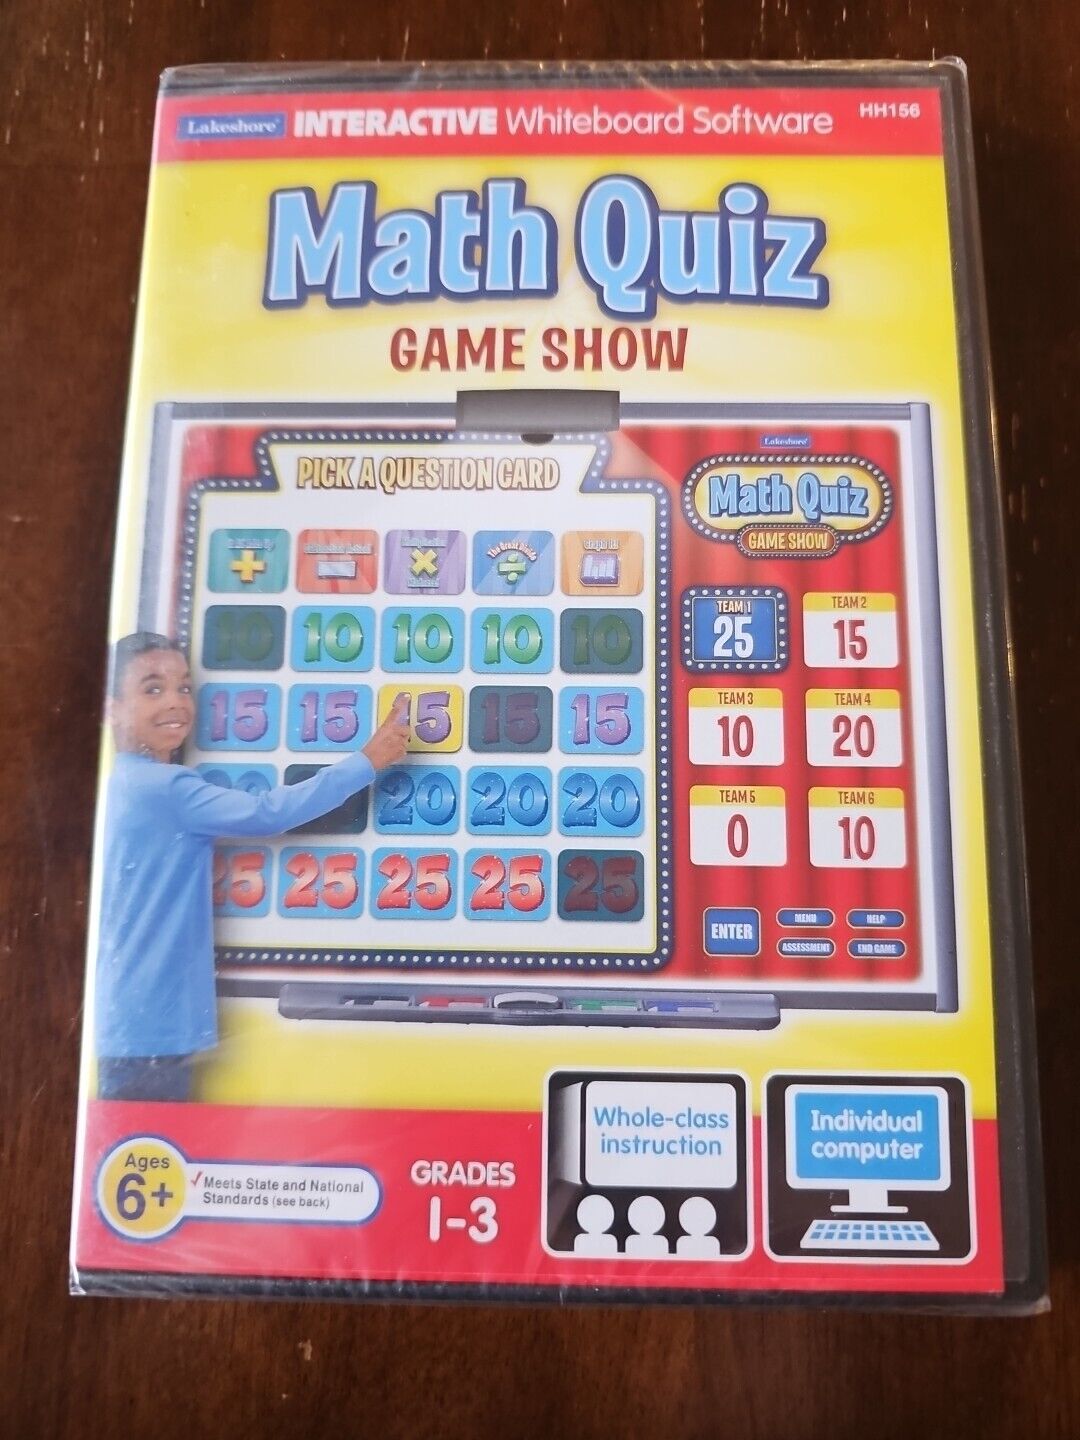 New Math Quiz Game Show (PC) Lakeshore Interactive. Grades 1-3 Learn Math Skills